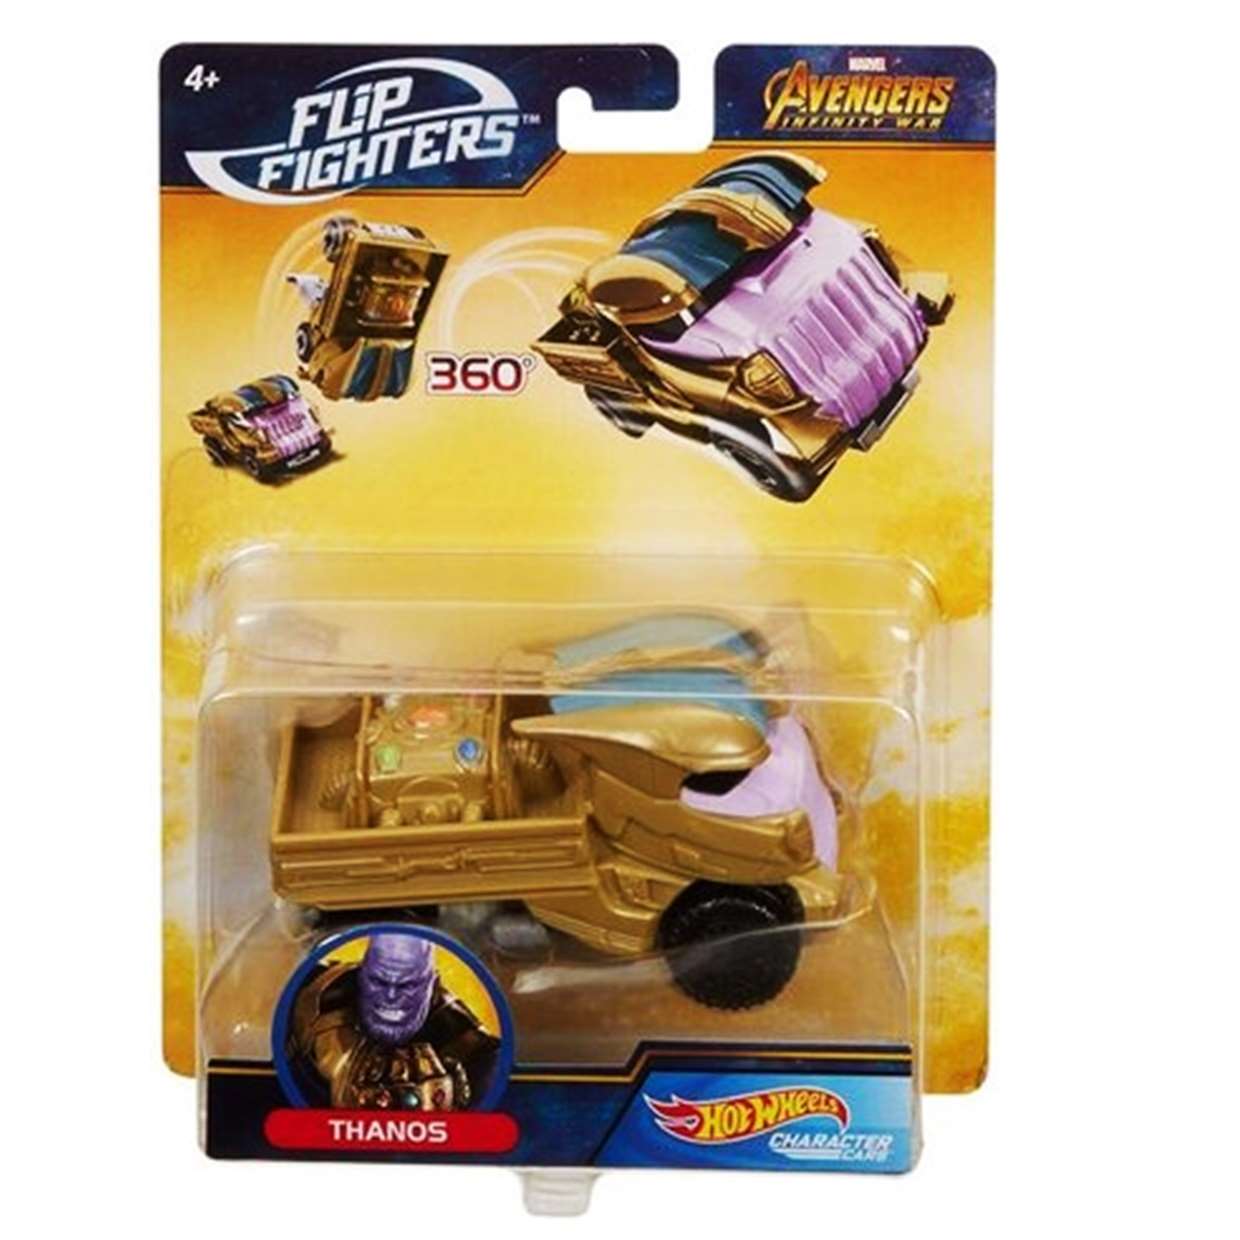 Thanos 360 Hot Wheels Infinity War Flip Fighters 